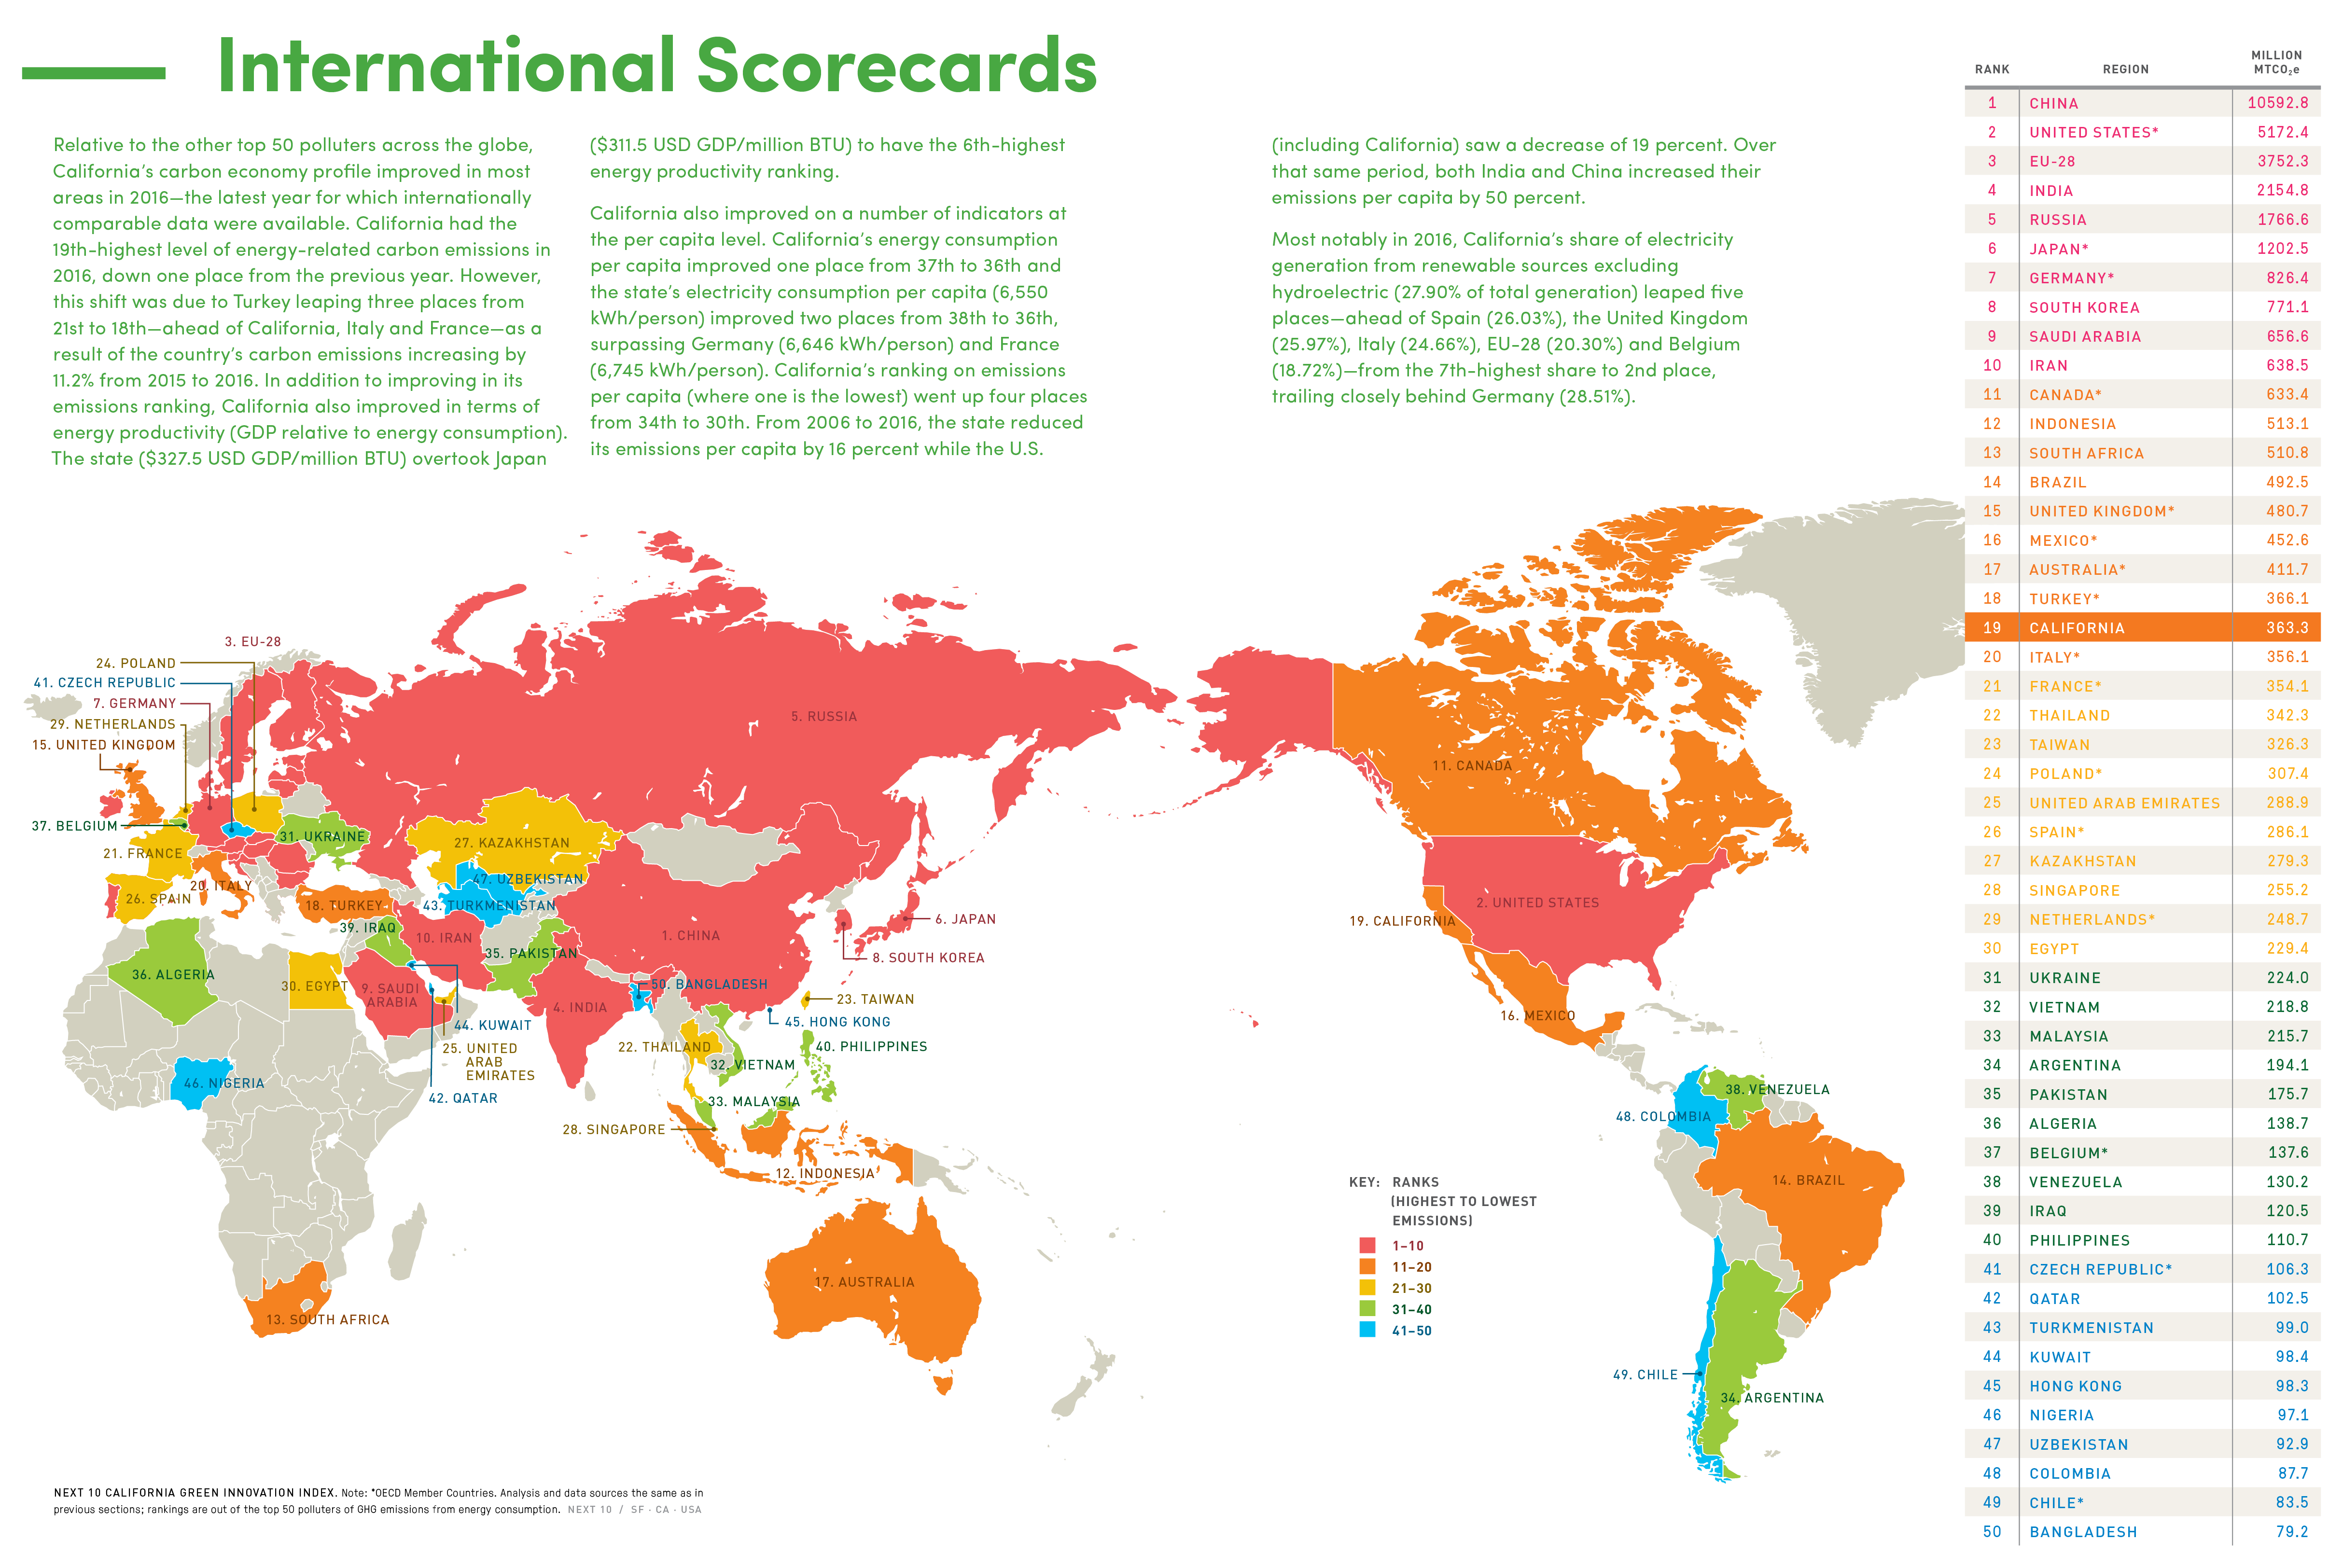 International Scorecards — Emissions Rankings